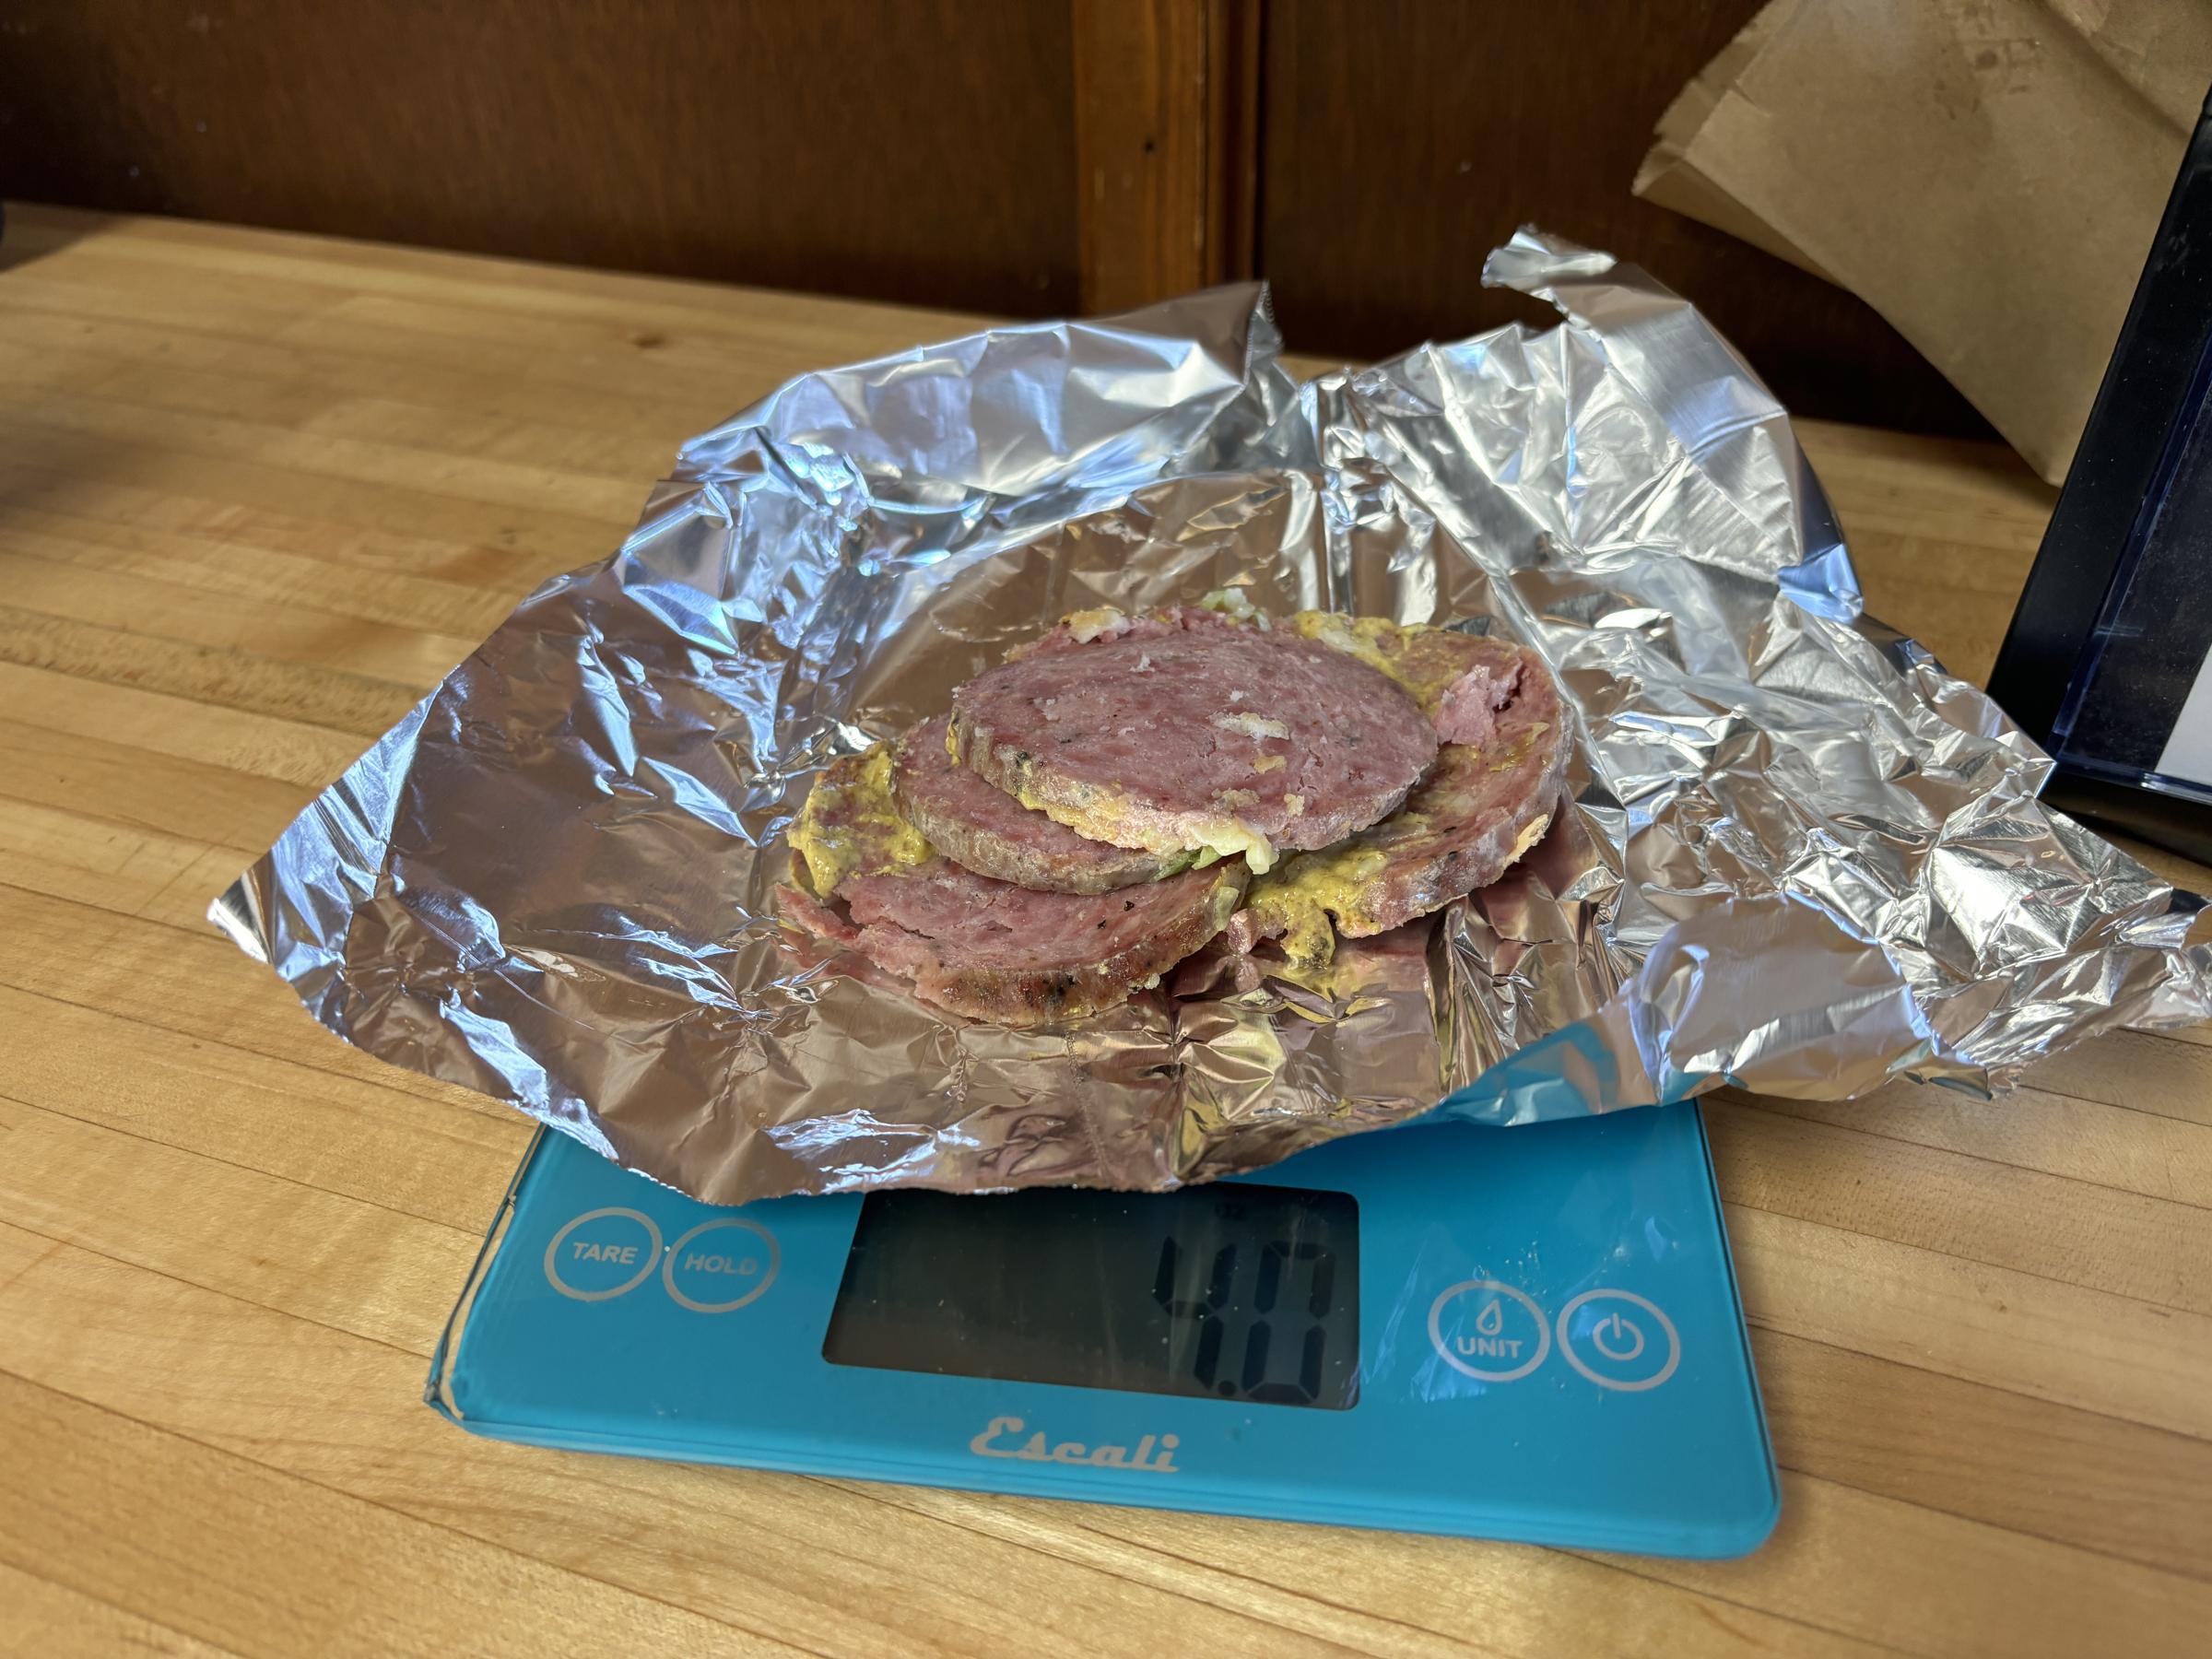 Gioia's Deli sandwich meat weight - 4oz